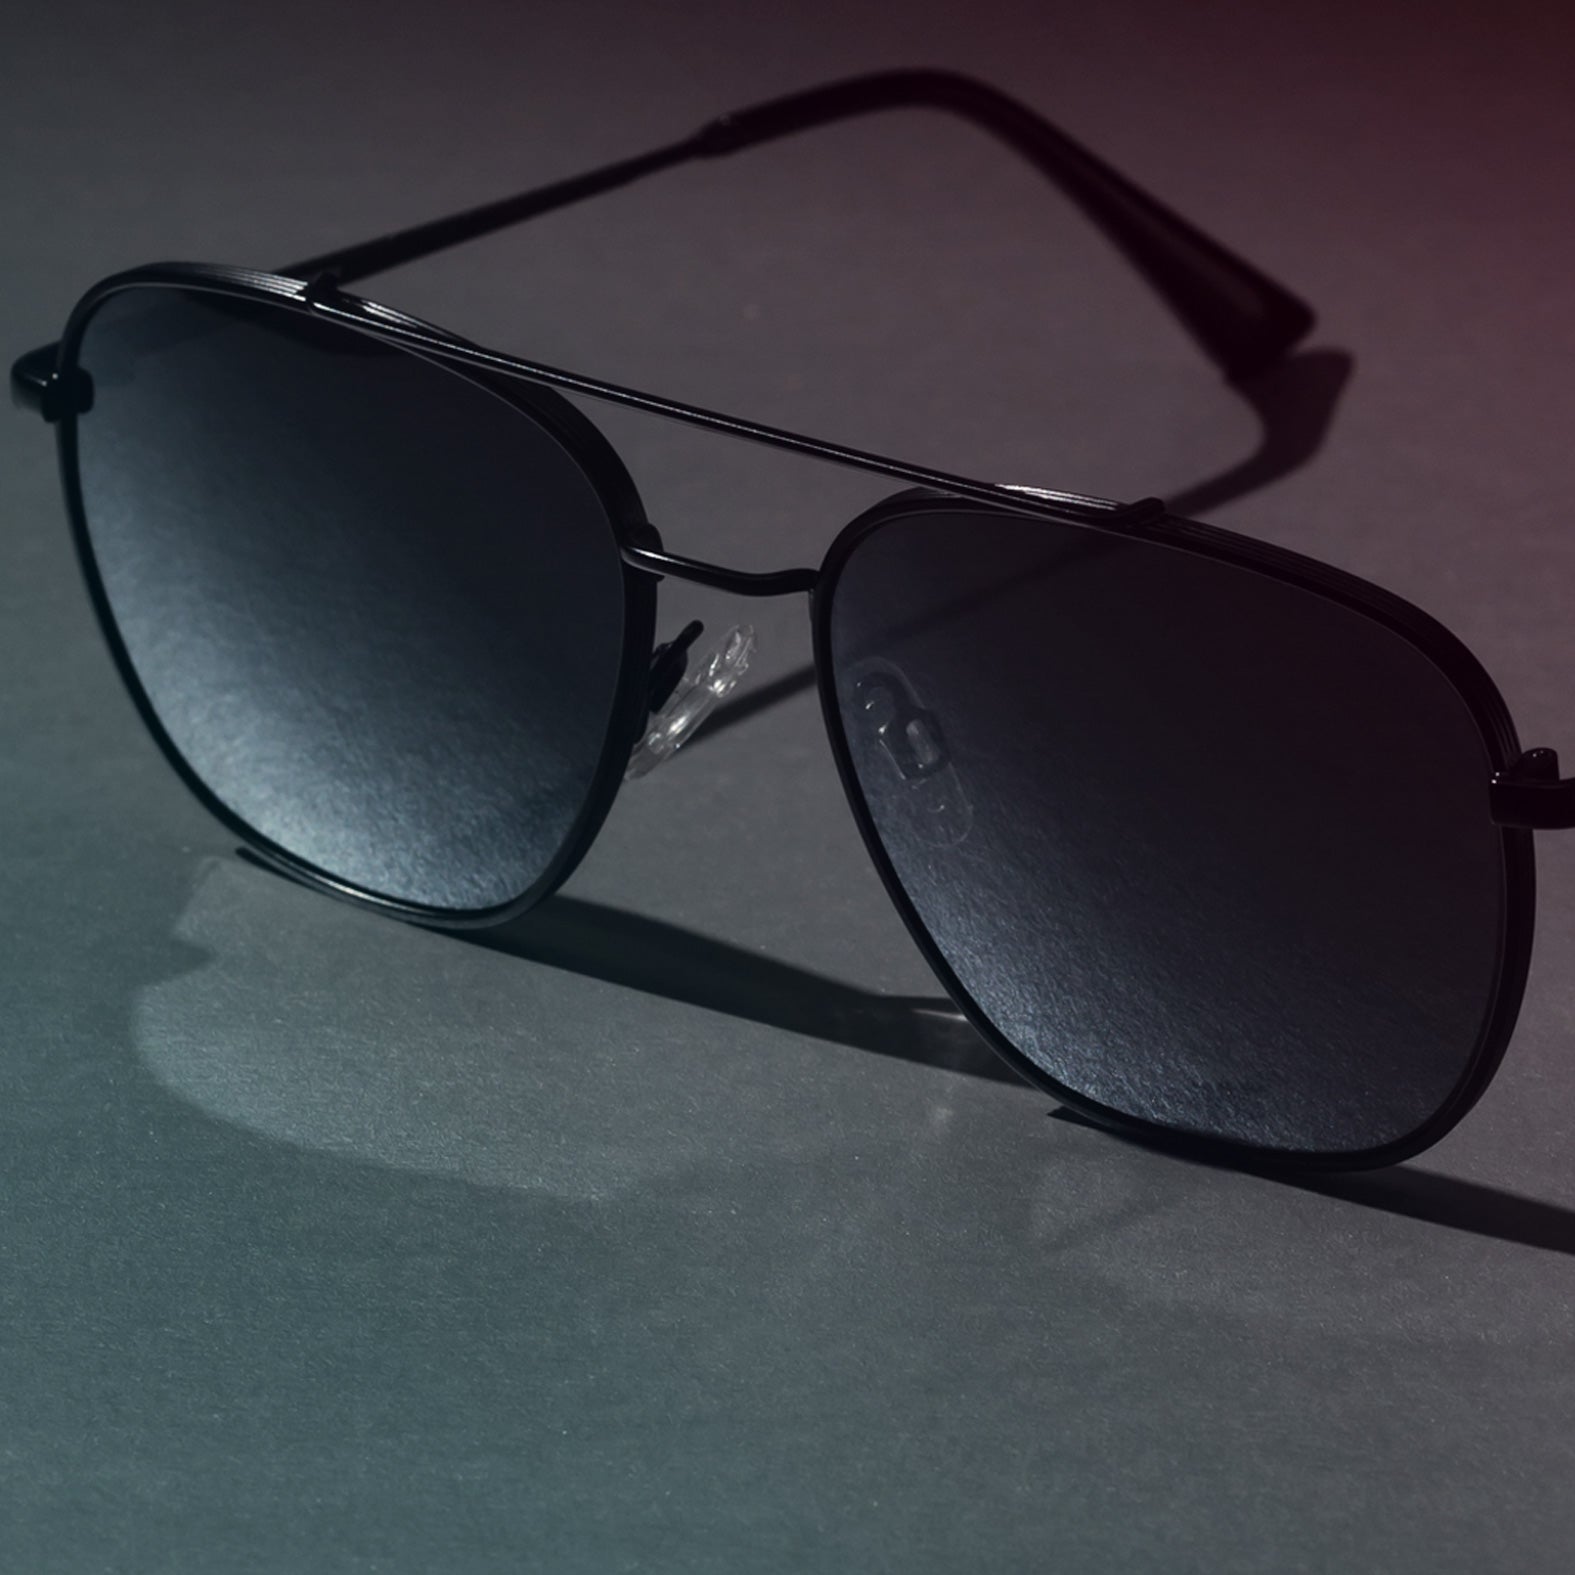 Pilotfish Eyewear Retainers  No-Tail Adjustable Sunglasses Straps